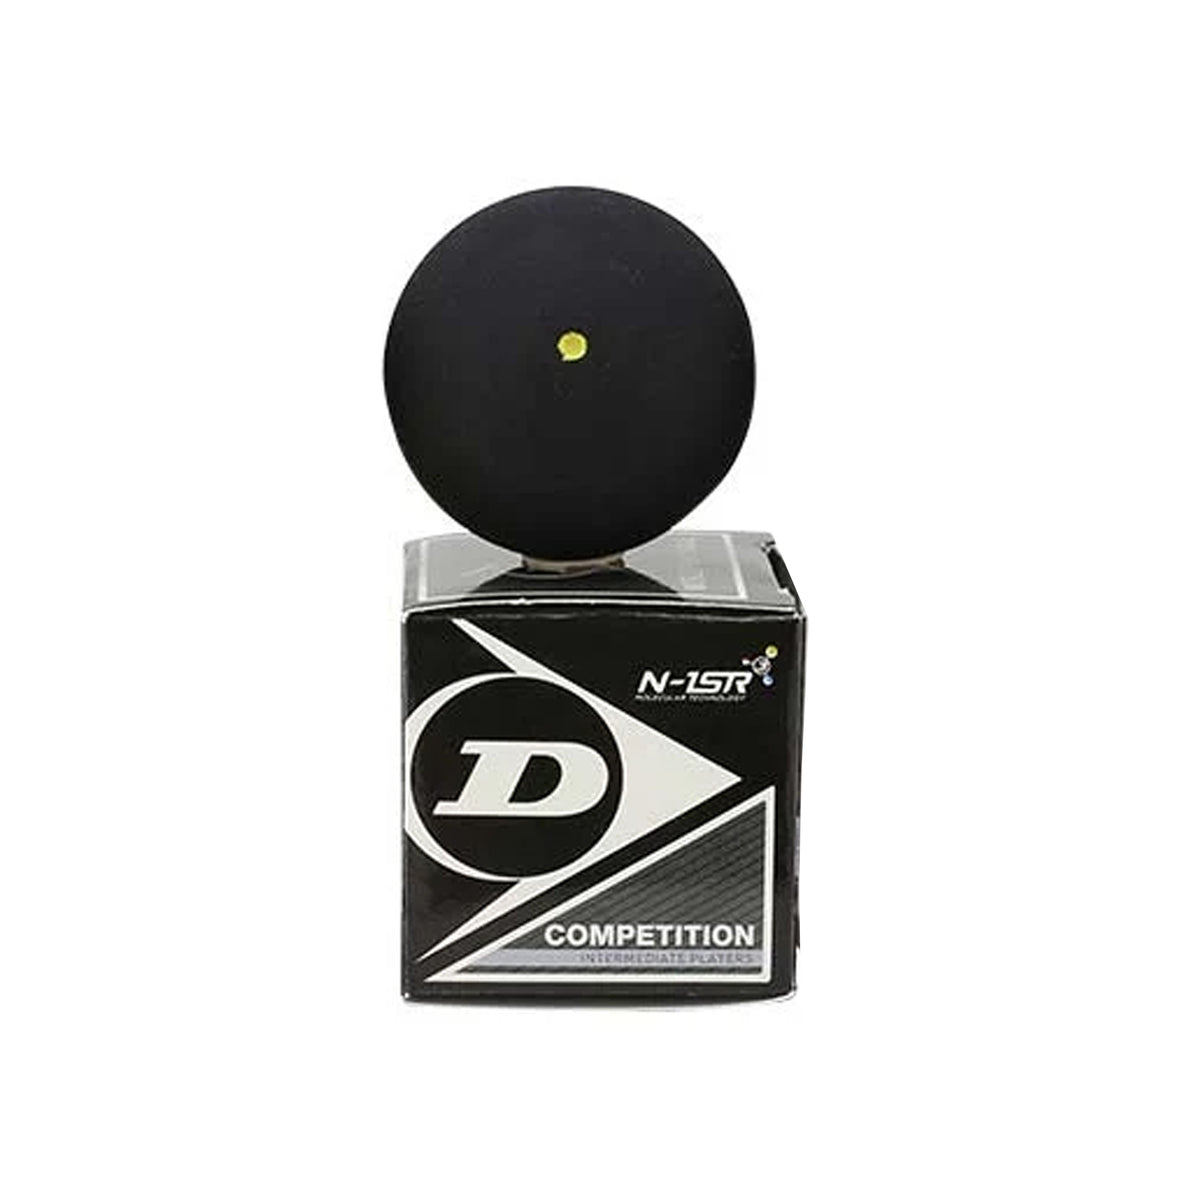 Dunlop Competition Squash Ball (Single Yellow Dot)